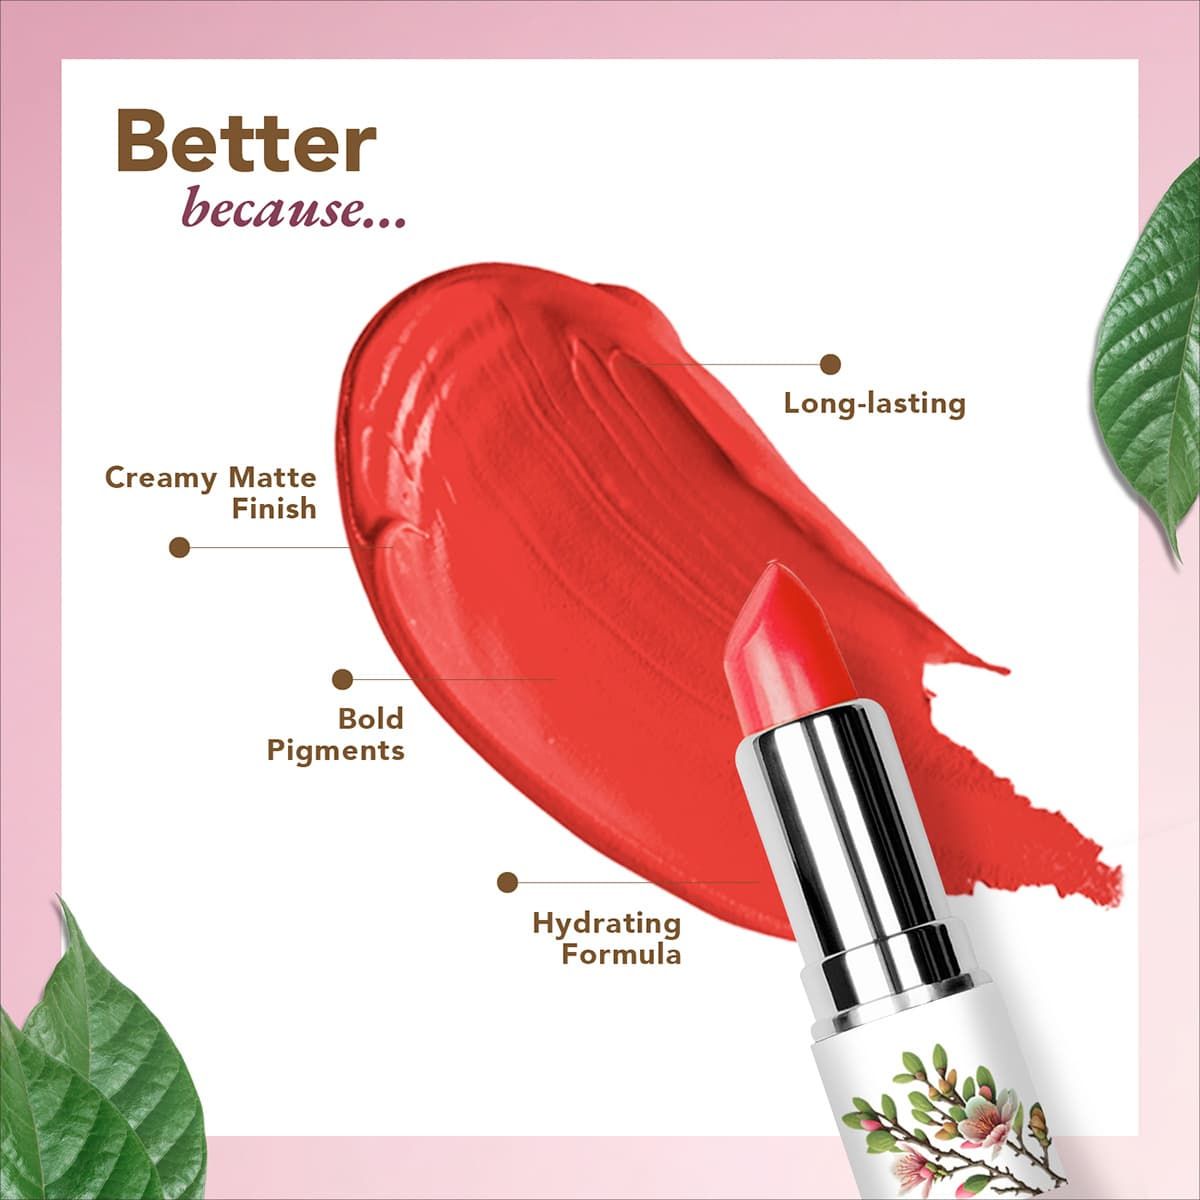 organic harvest organic moisture matte lipstick nepal cherry red